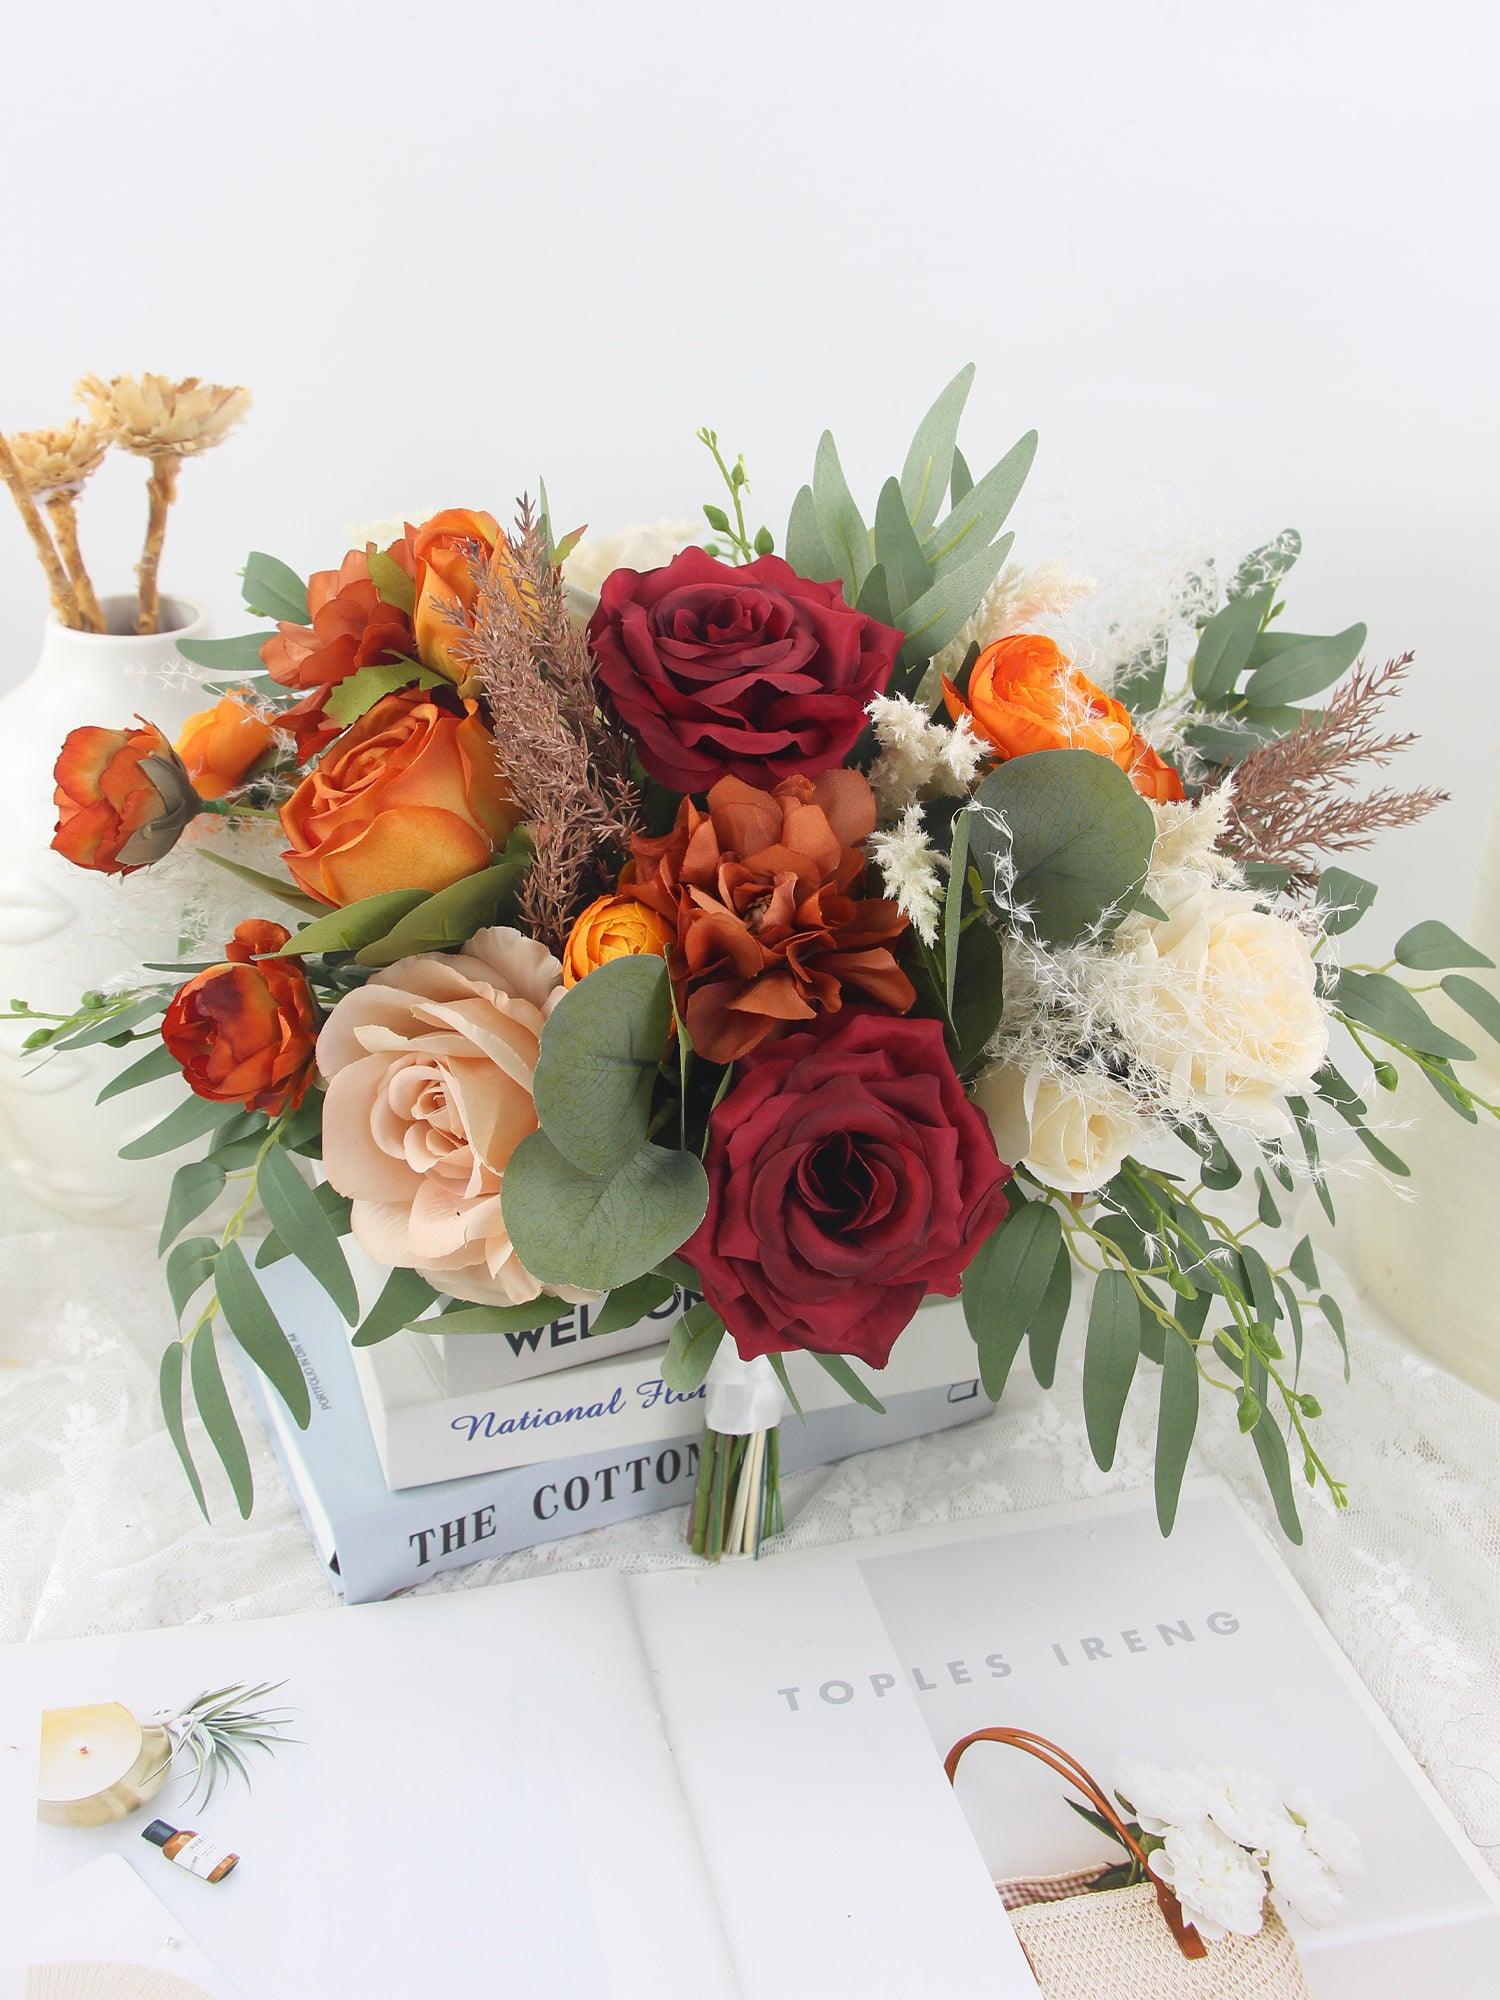 16 inch wide Burgundy & Burnt Orange Bridal Bouquet - Rinlong Flower